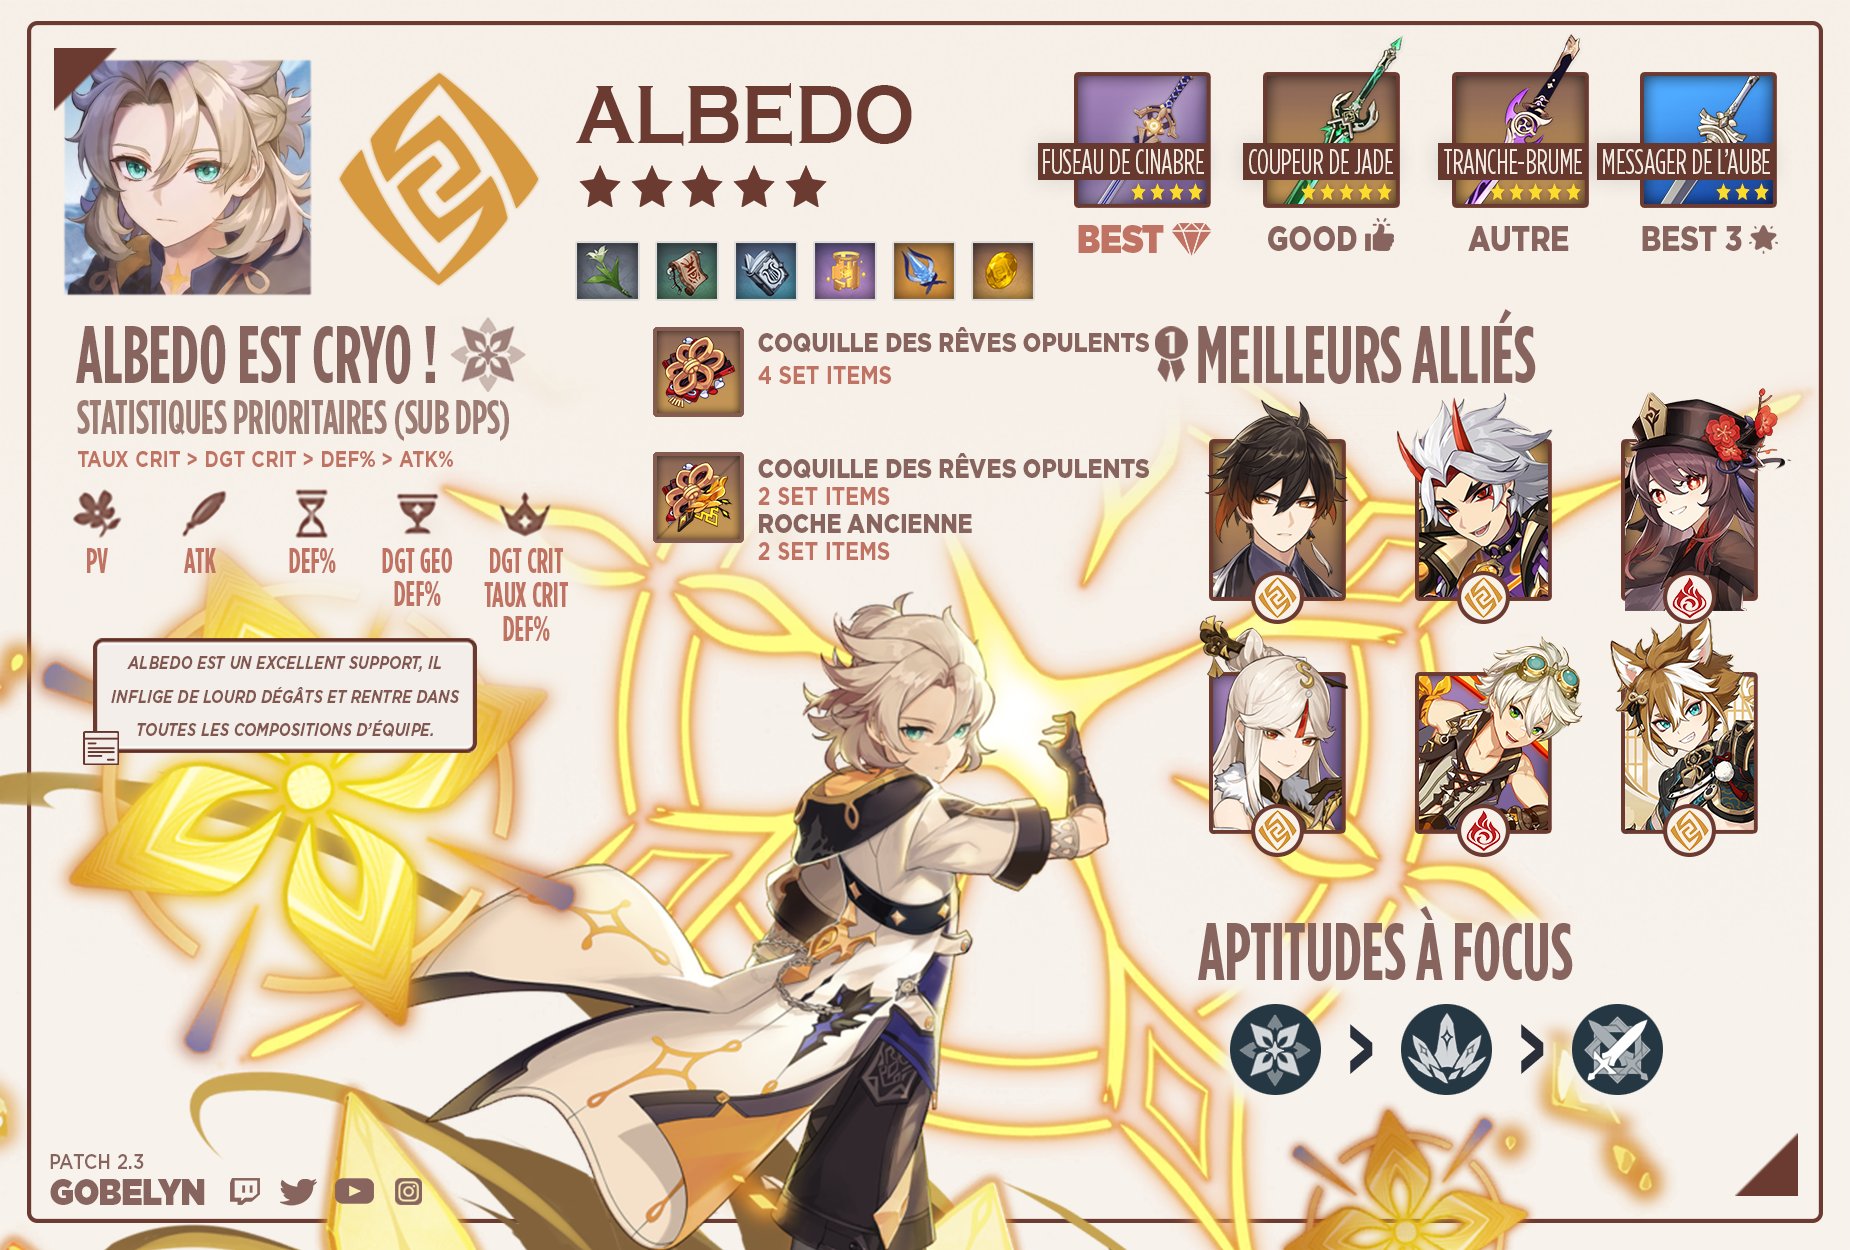 Genshin Impact: The Best Build for Albedo - Millenium